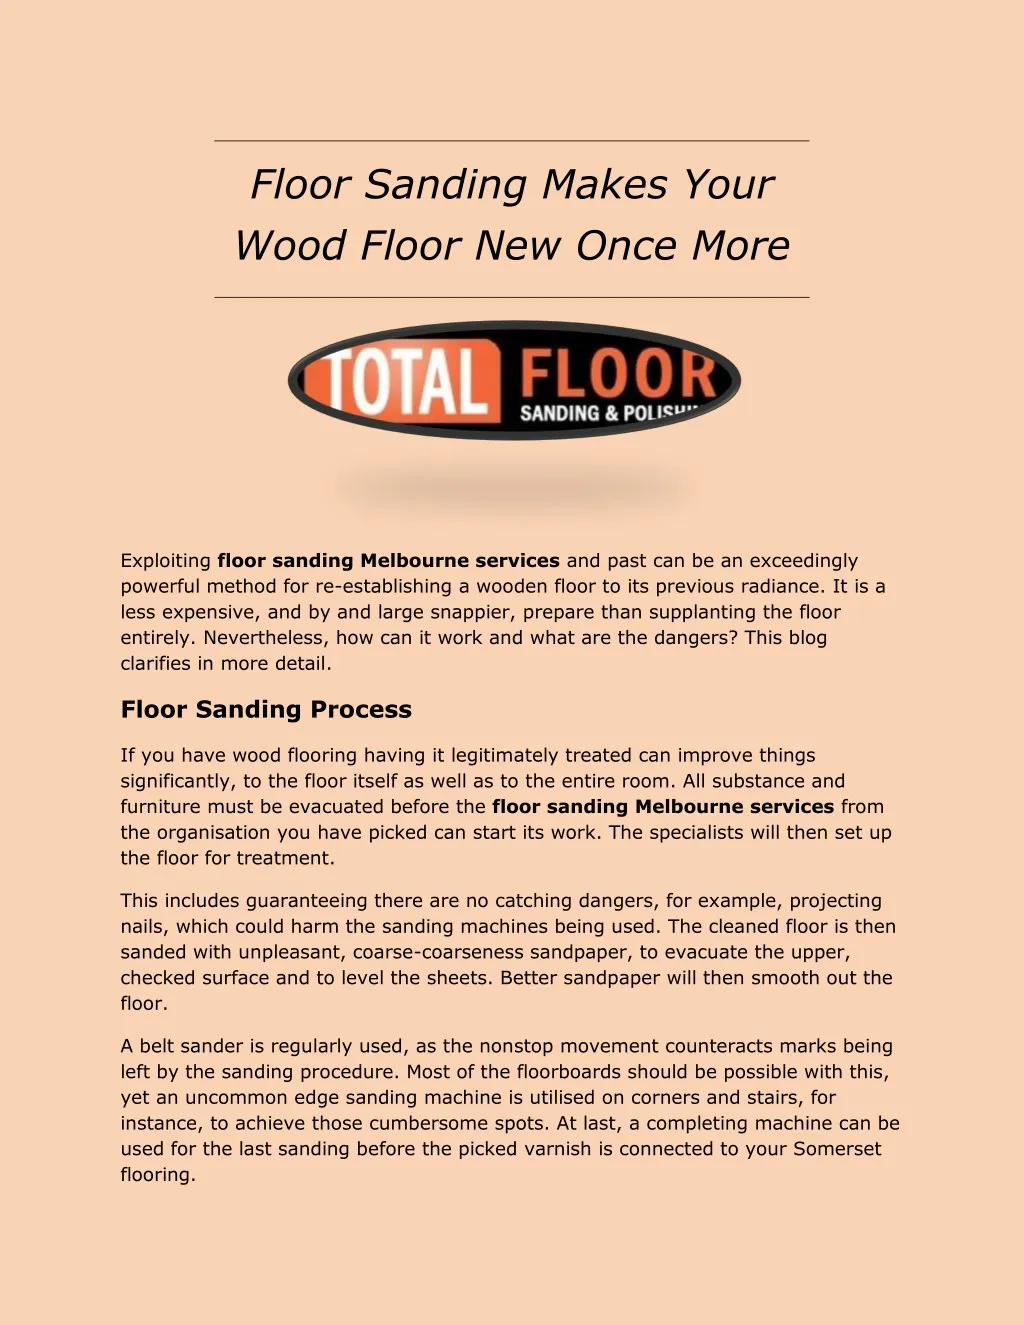 floor sanding makes your wood floor new once more